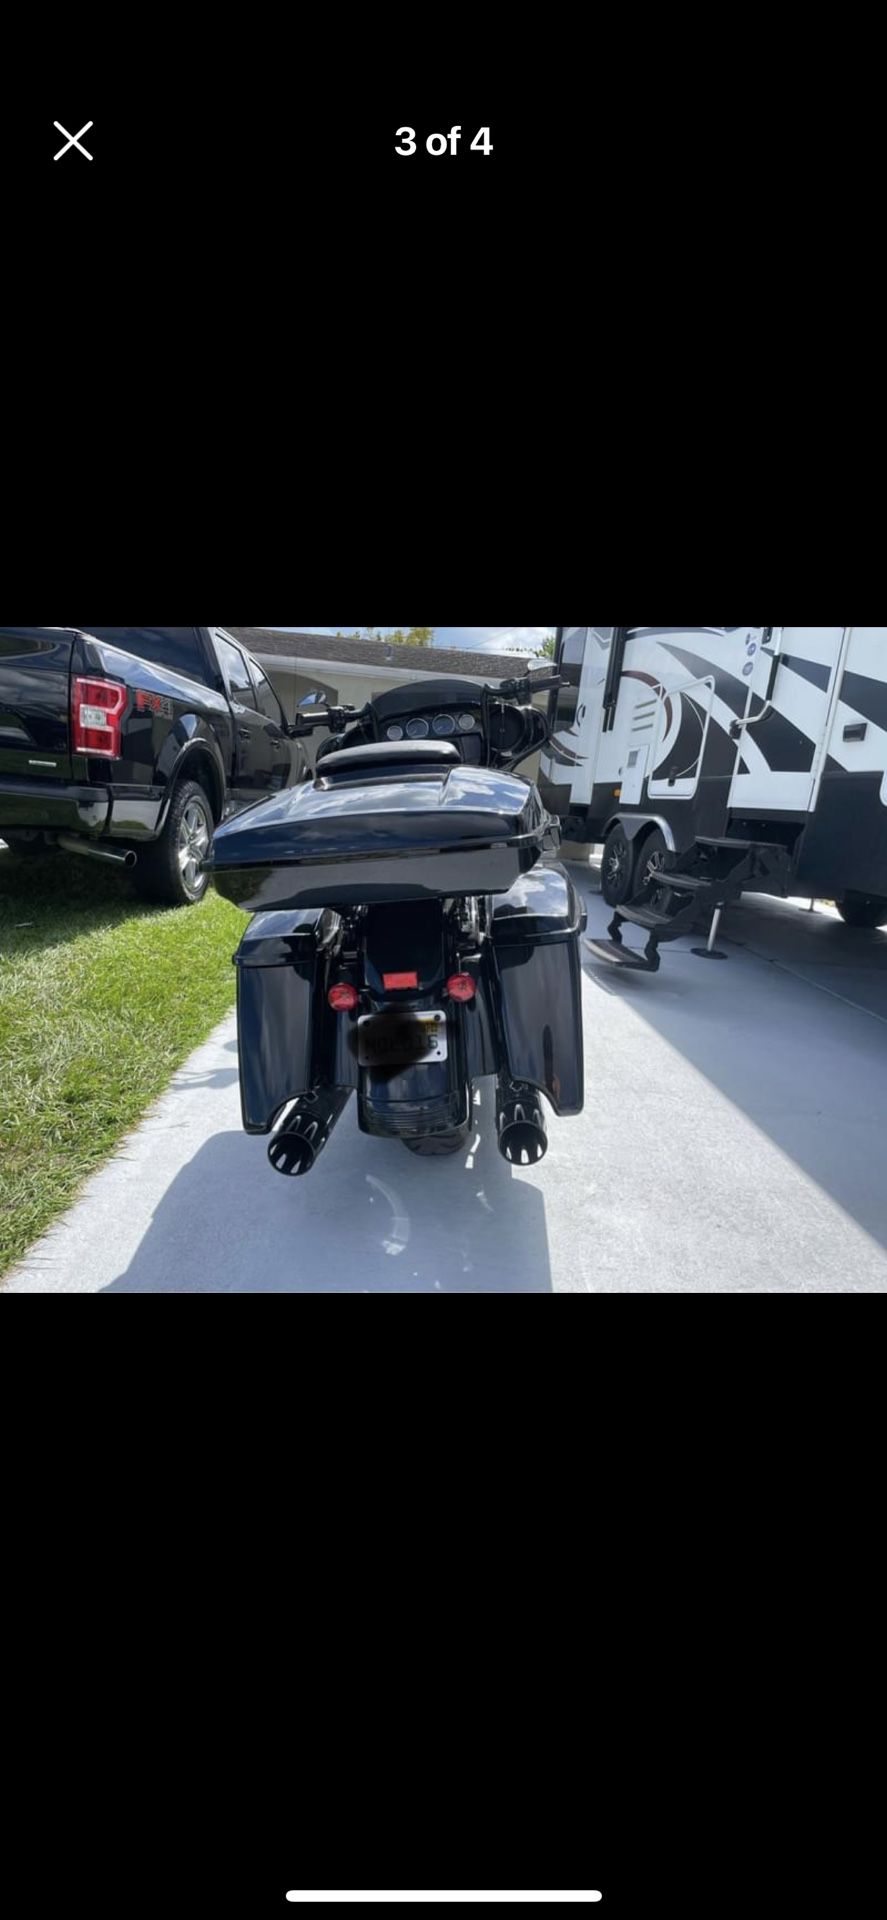 2020 Harley-Davidson Street glide special